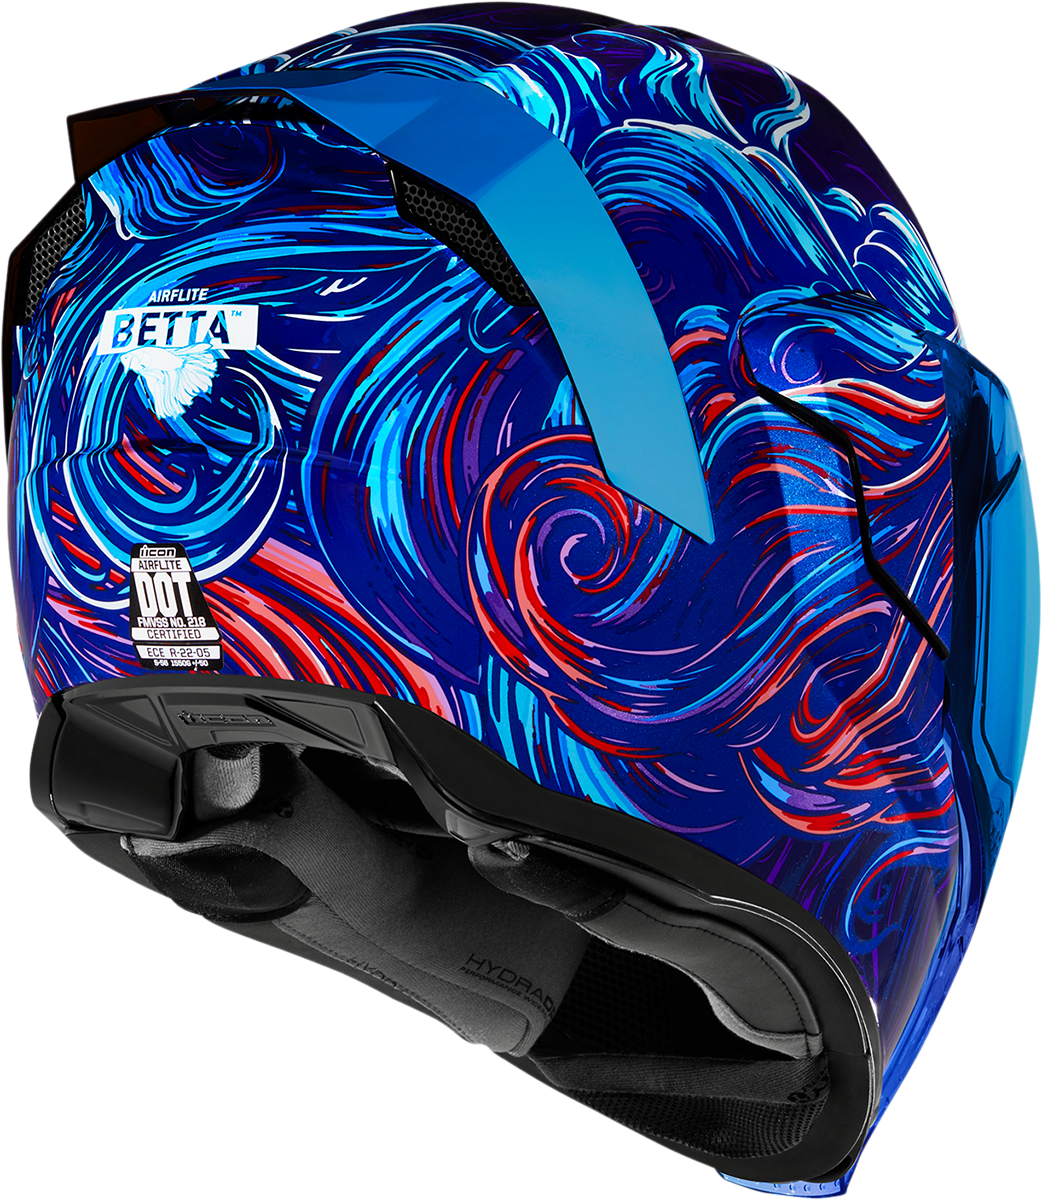 ICON Airflite* Helmet - Betta - Blue - Large 0101-14709